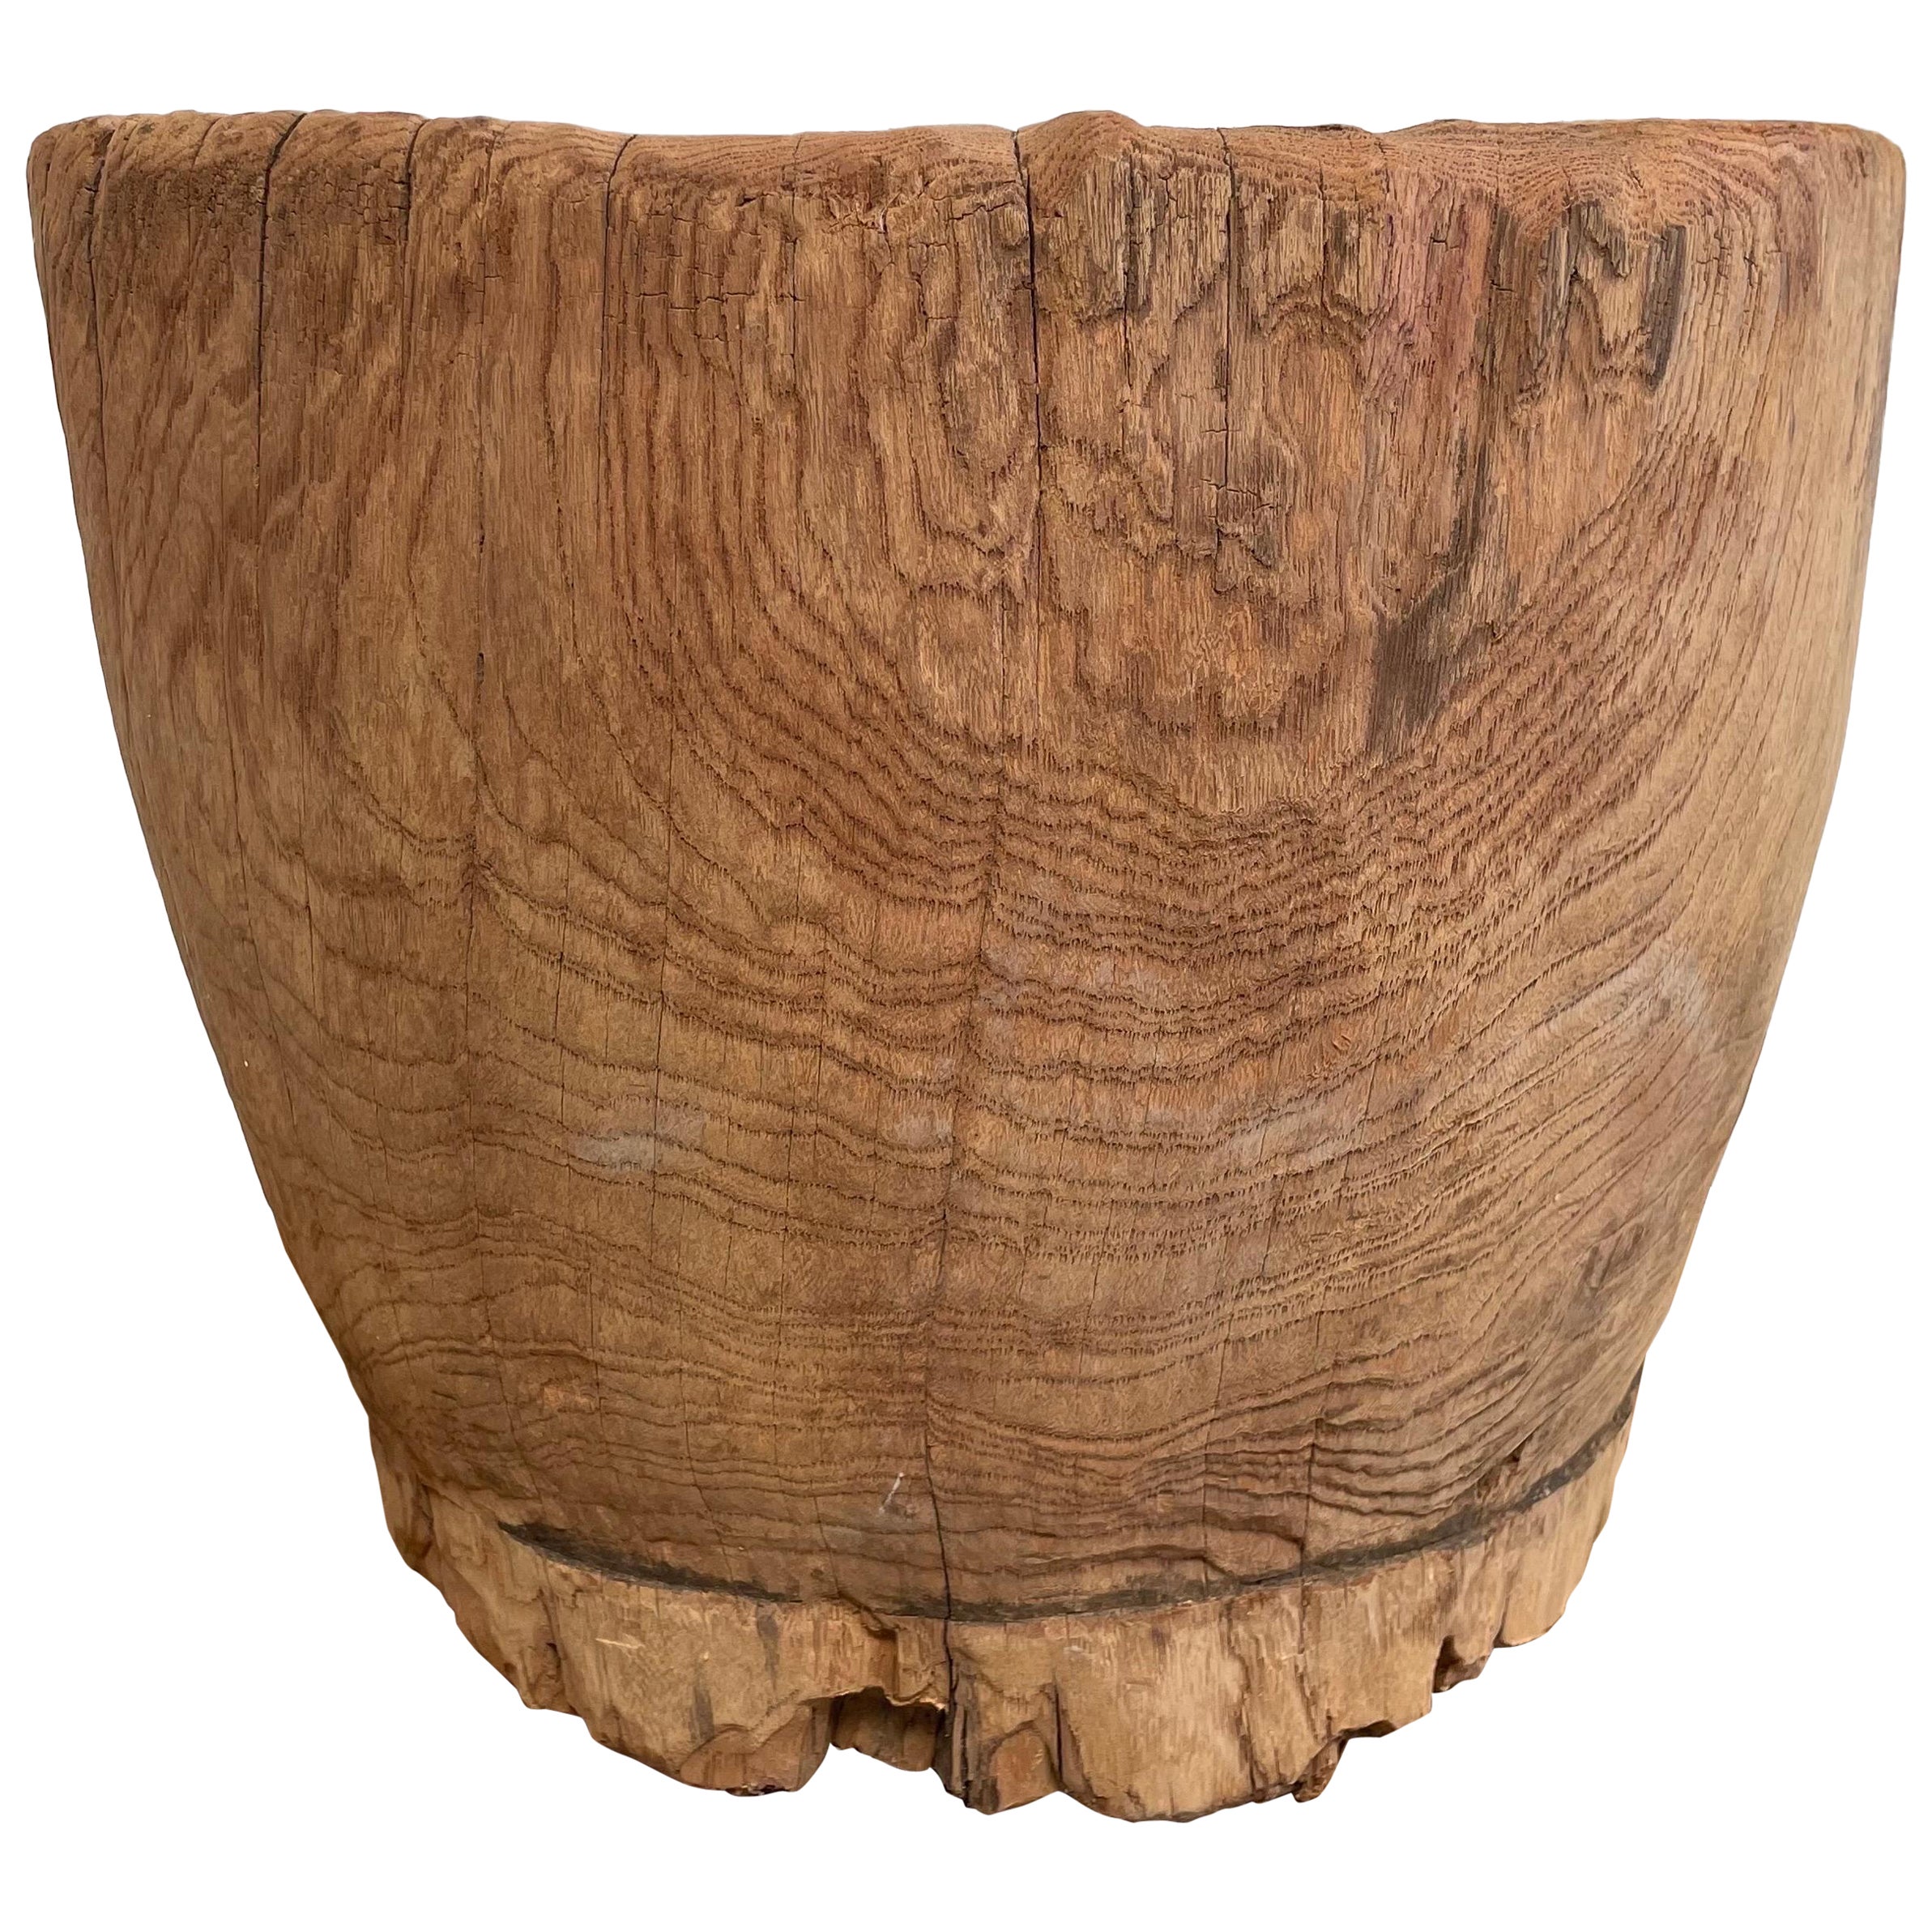 Decorative Wood Stump Bowl